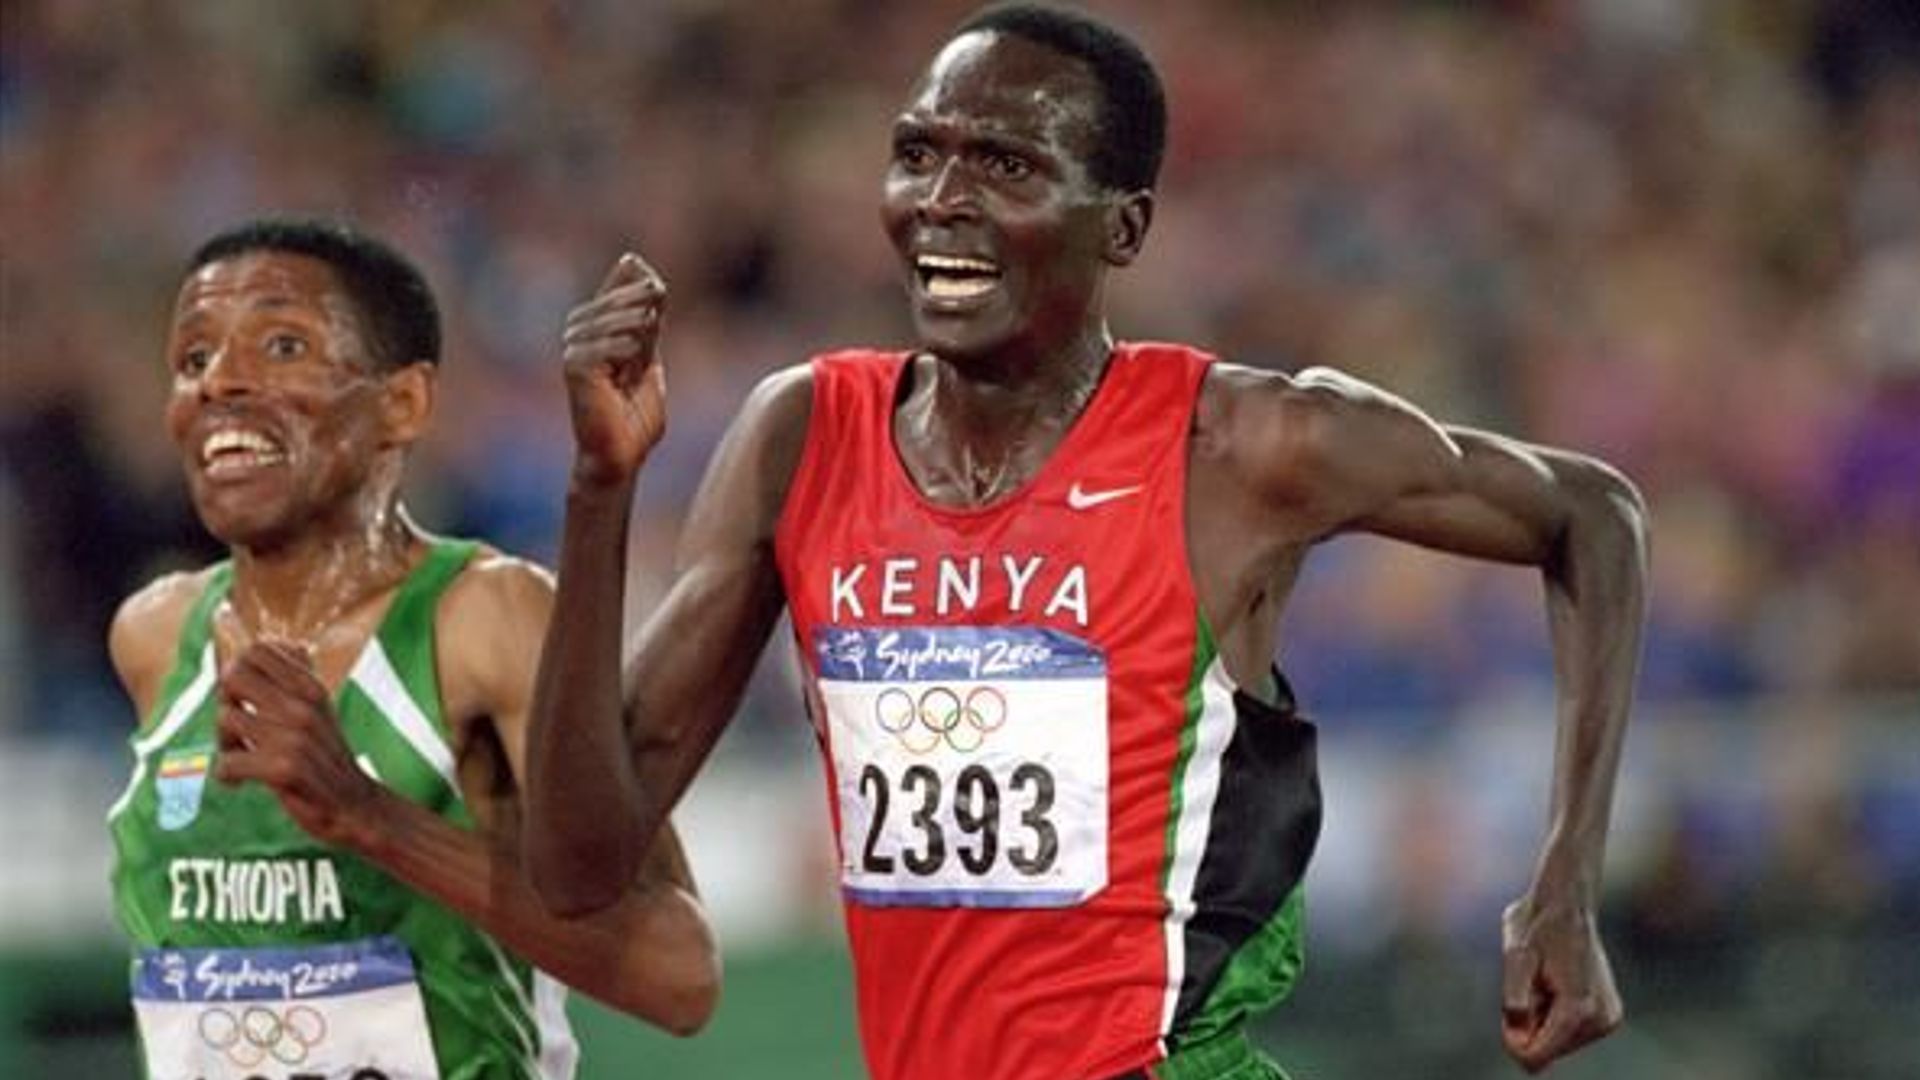 Paul Tergat and his Ethiopian rival Haile Gebrselassie (Image Credits - World Athletics)